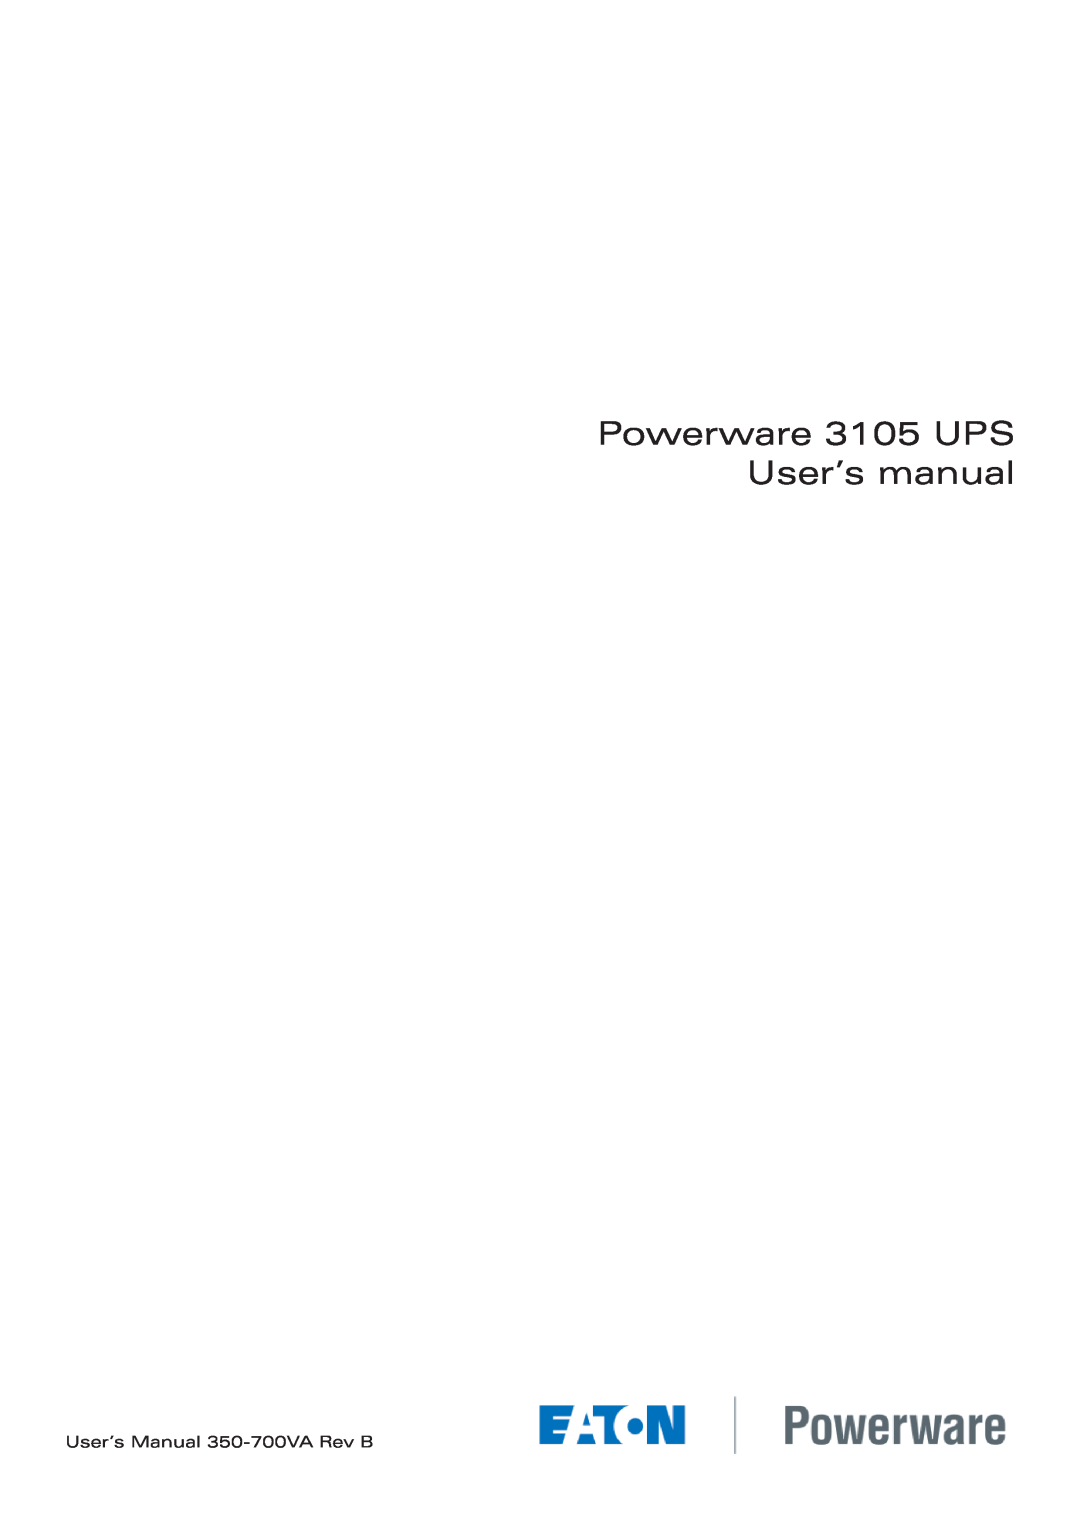 Eaton Electrical manual Powerware 3105 UPS UserÊs manual, UserÊs Manual 350-700VA Rev B 